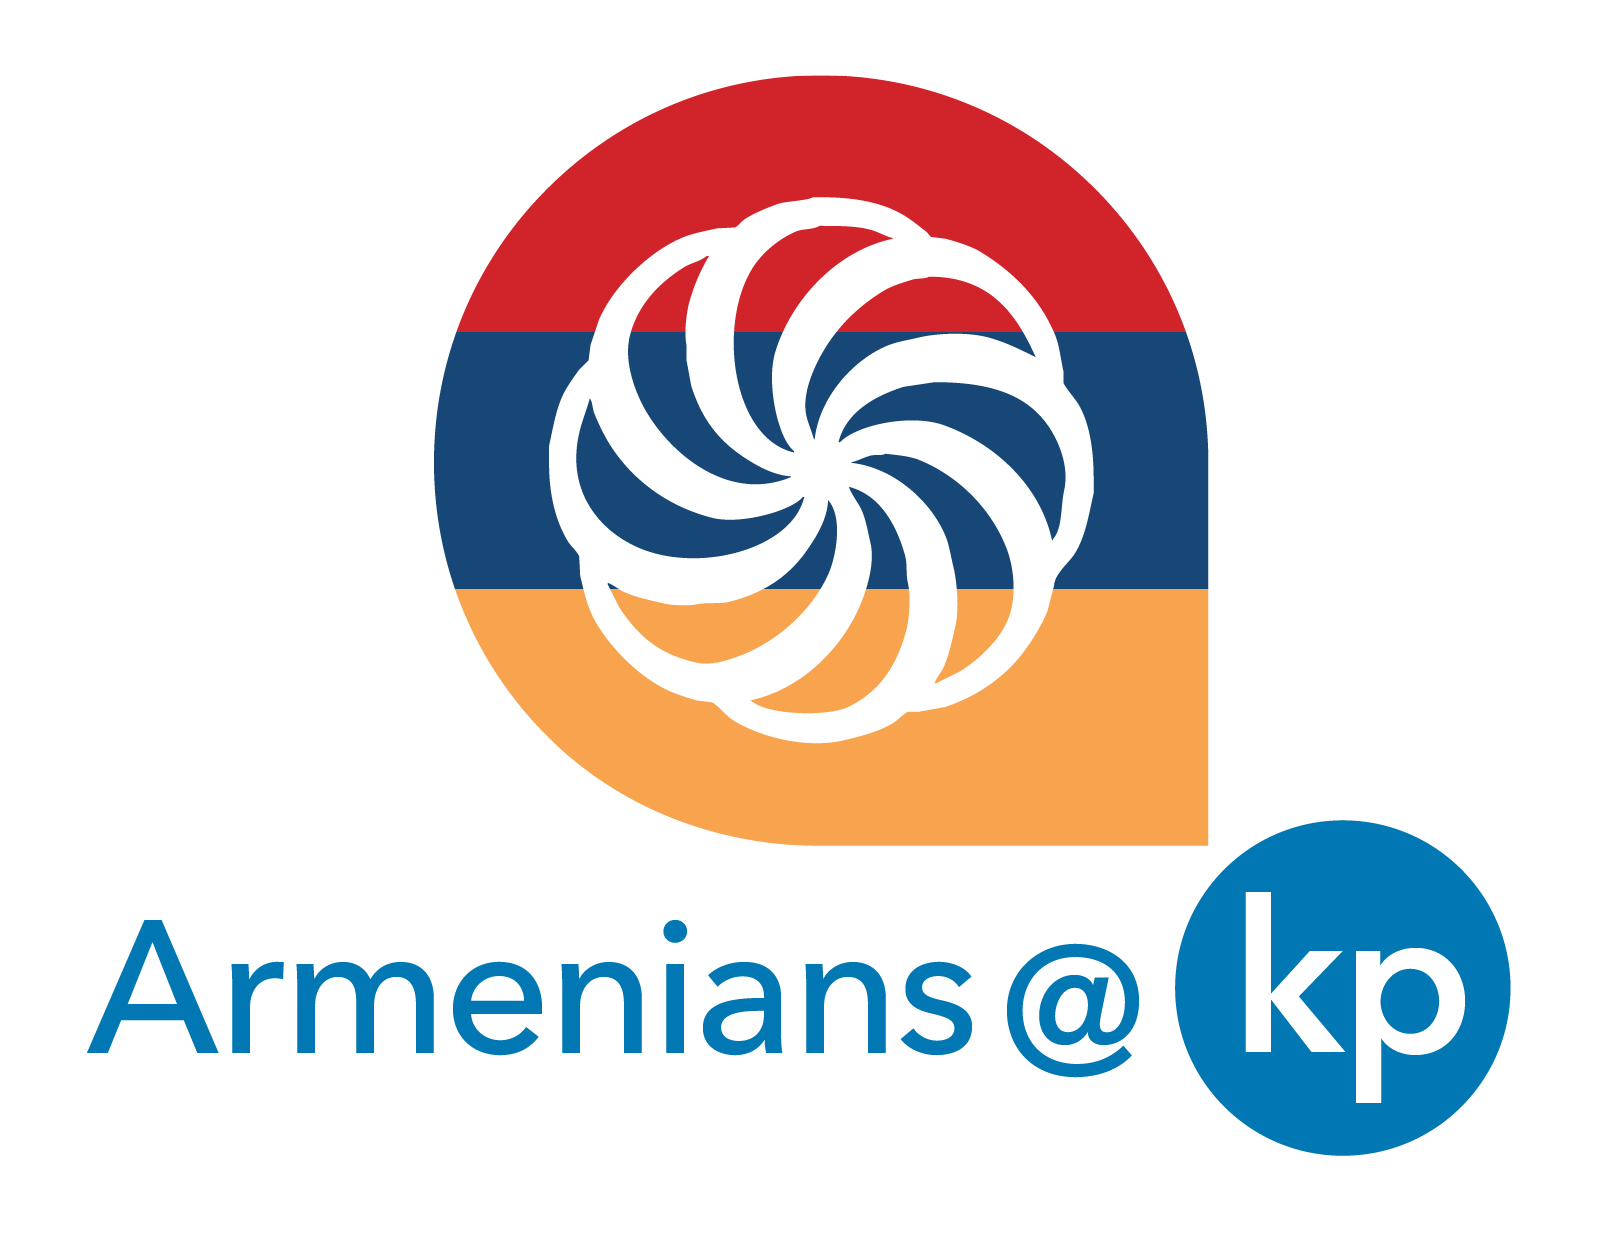 KP Armenian Connection logo